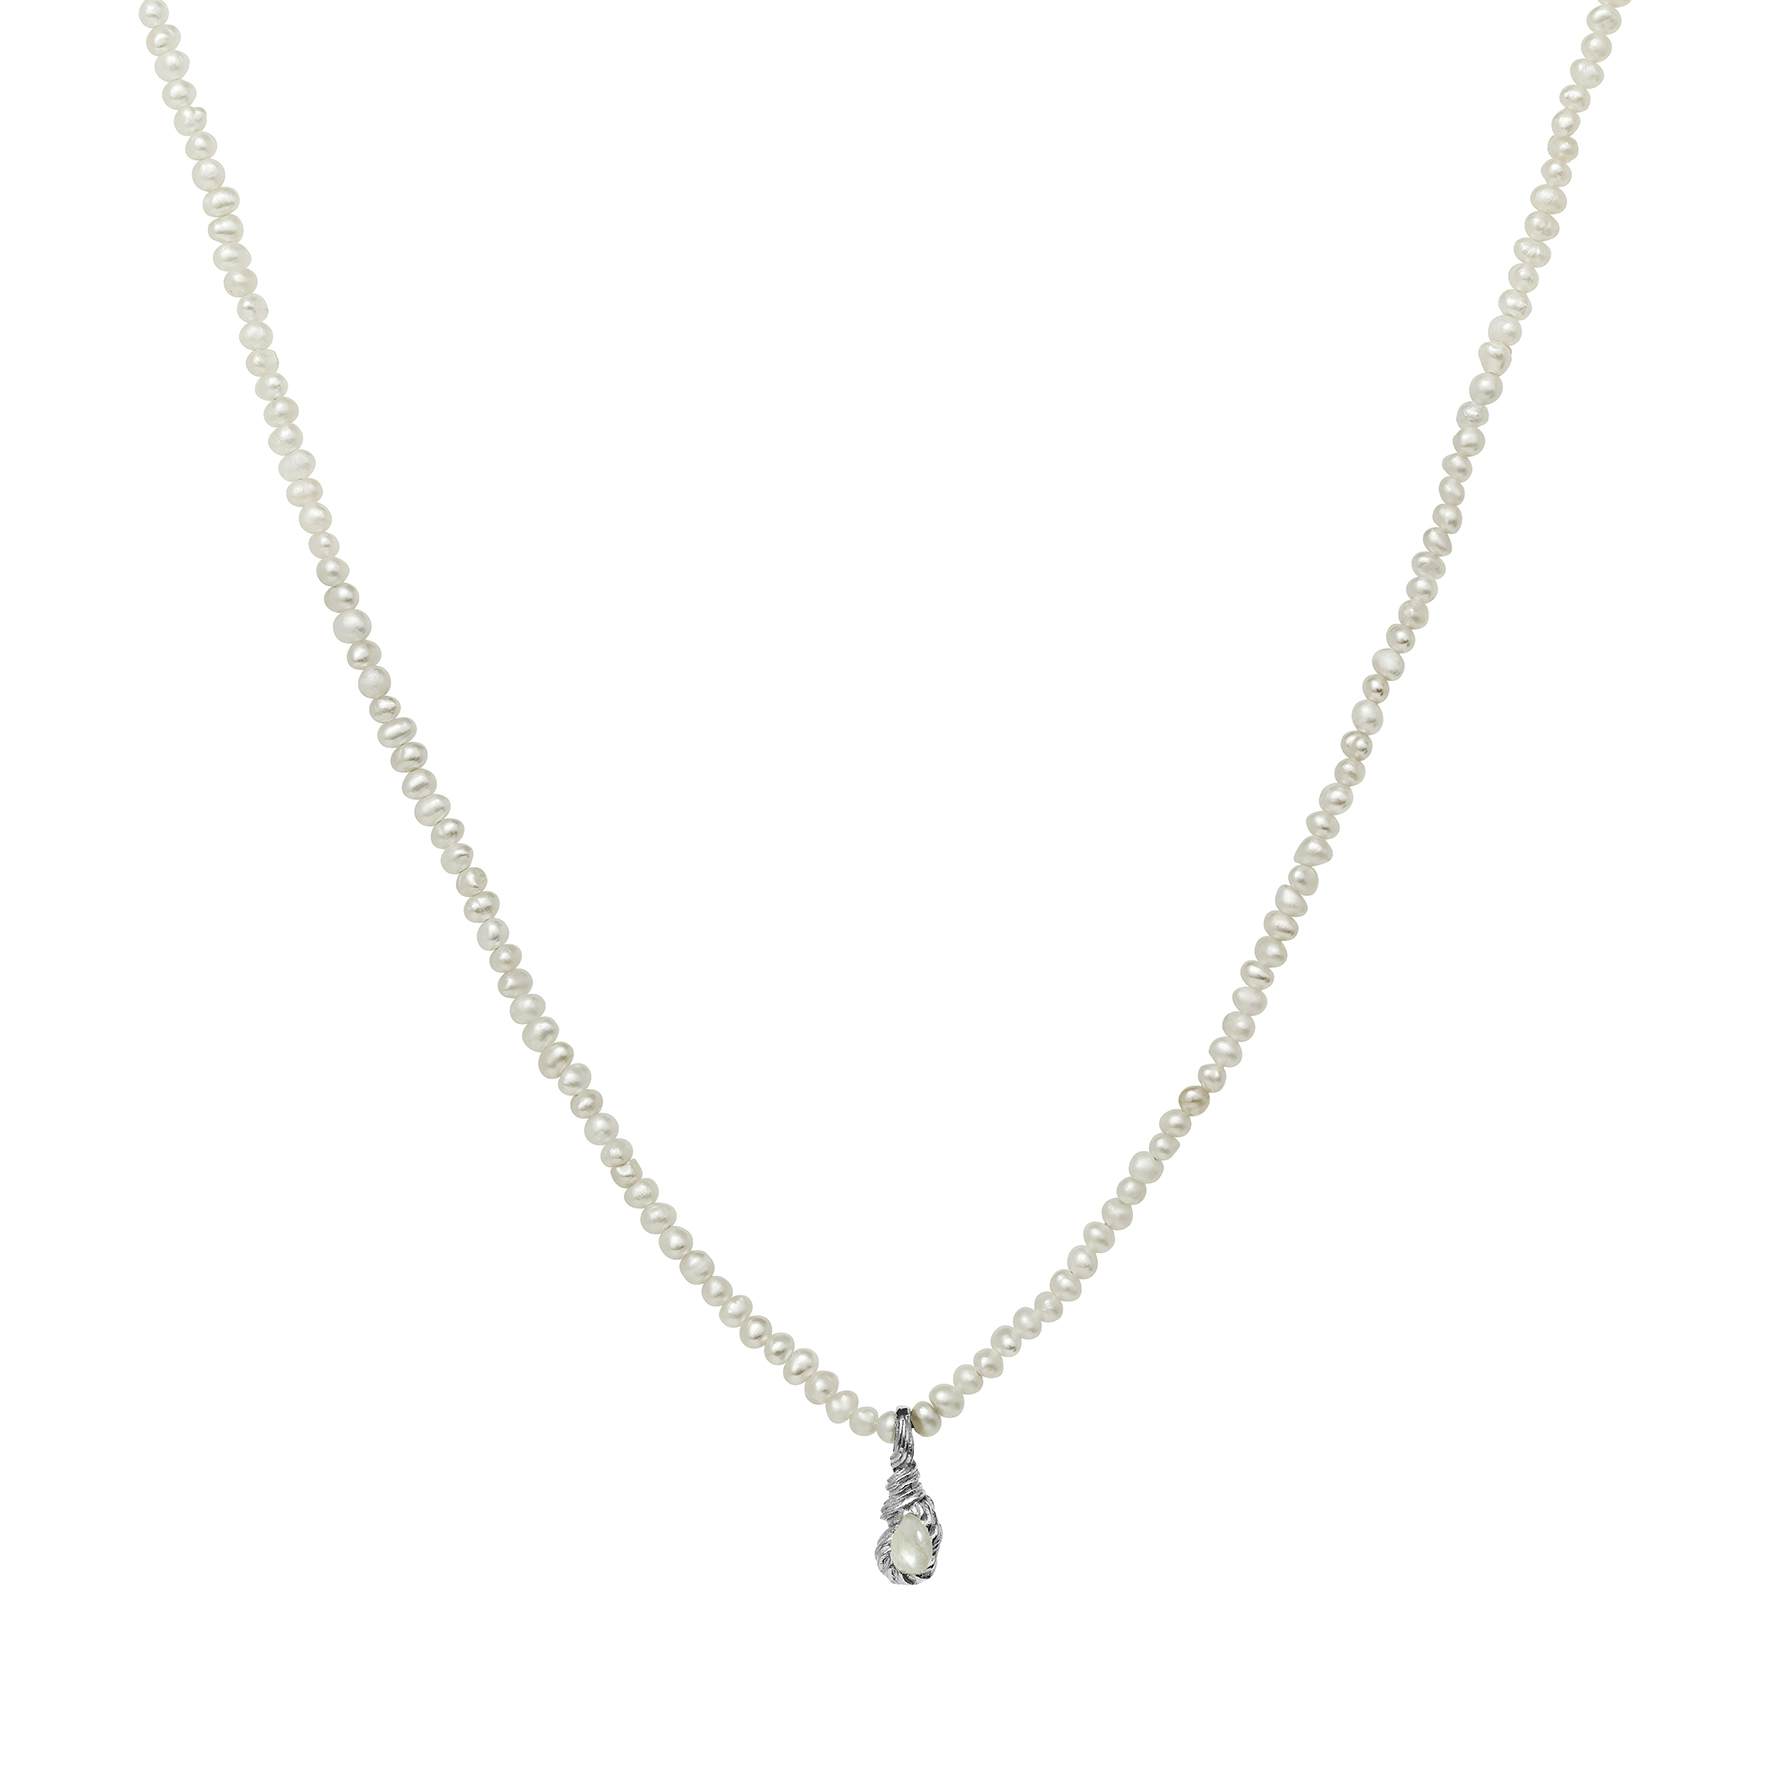 Aqua Necklace von Maanesten in Silber Sterling 925|Freshwater Pearl